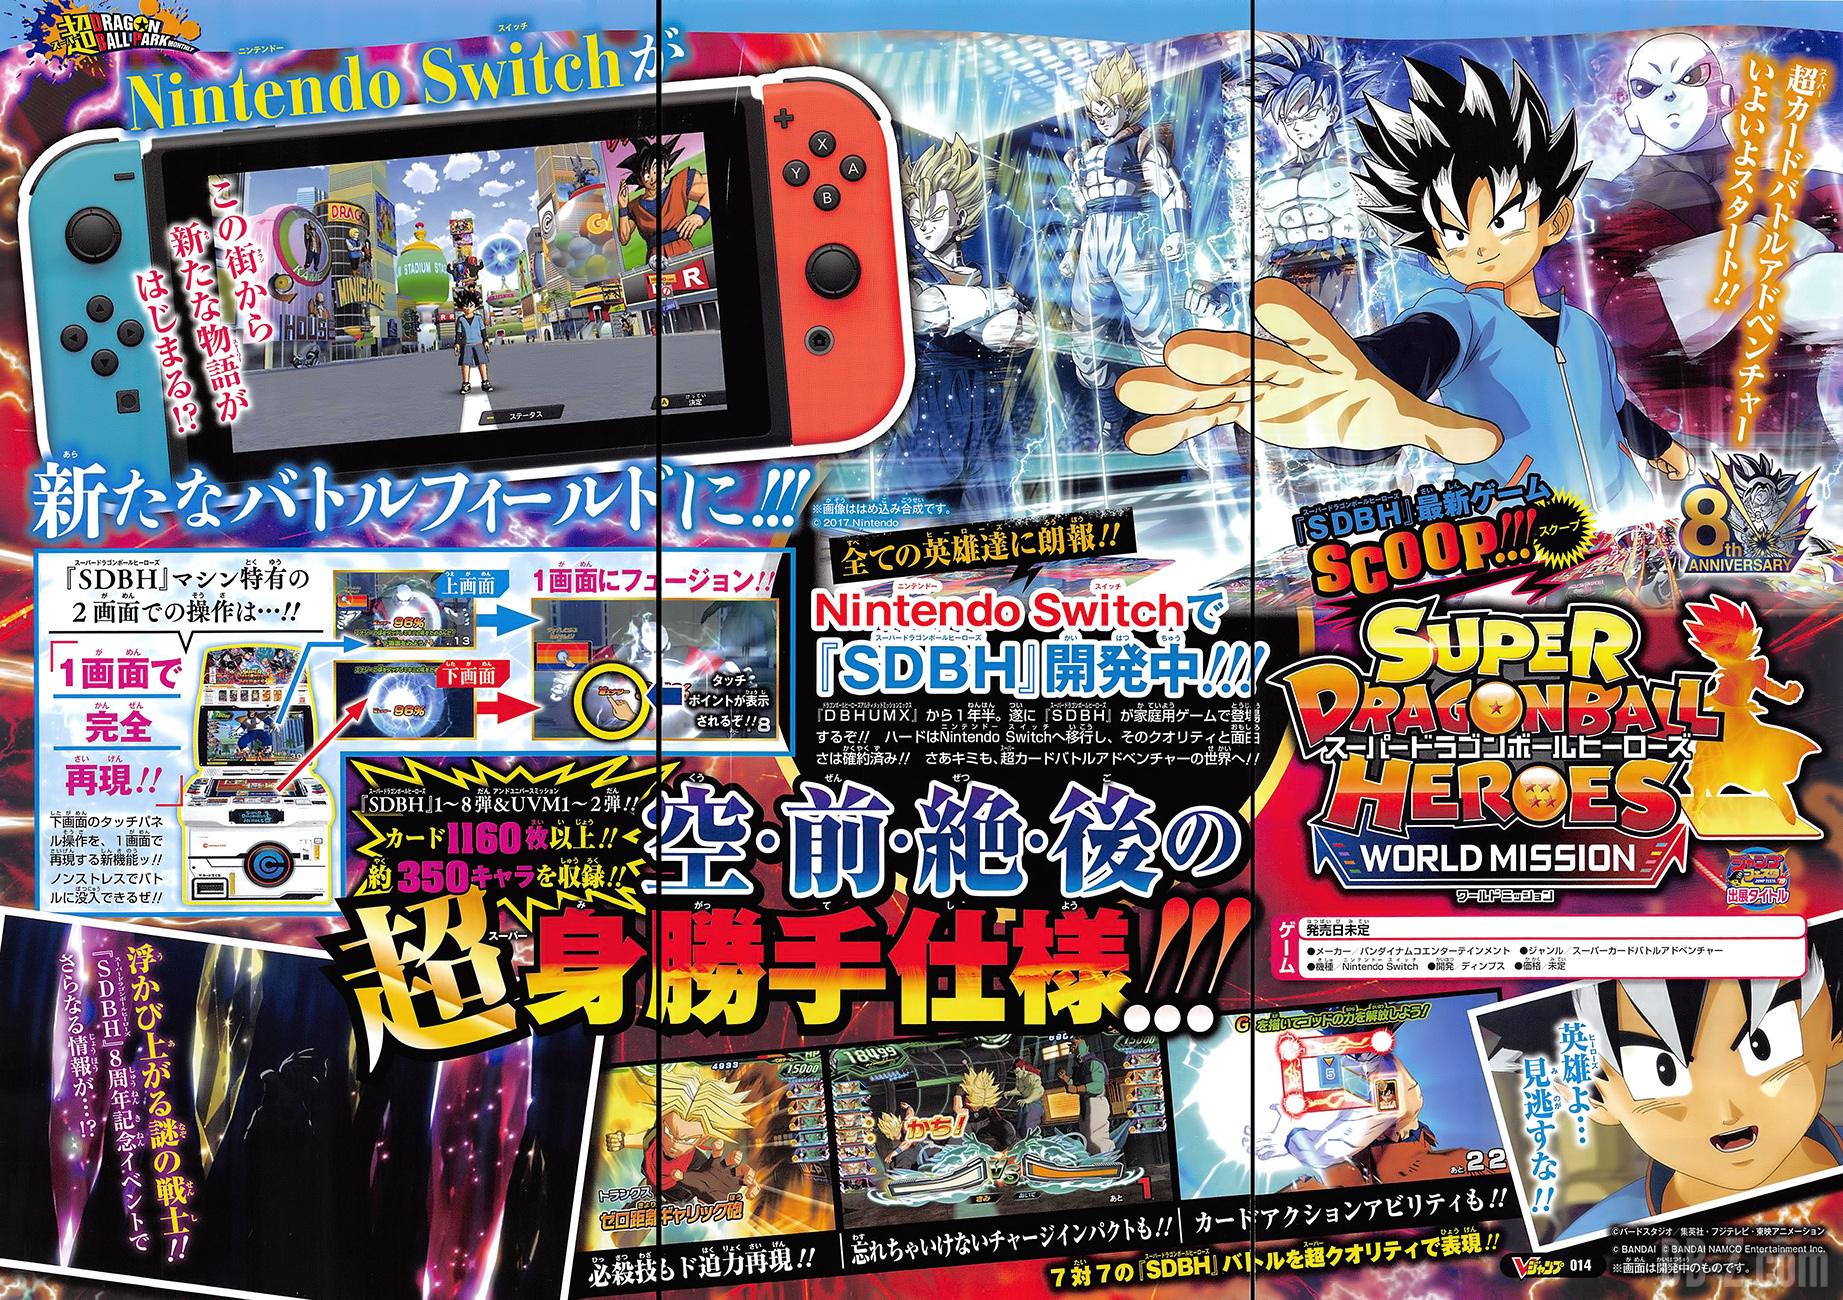 Super Dragon Ball Heroes 'World Mission' annoncé sur Nintendo Switch